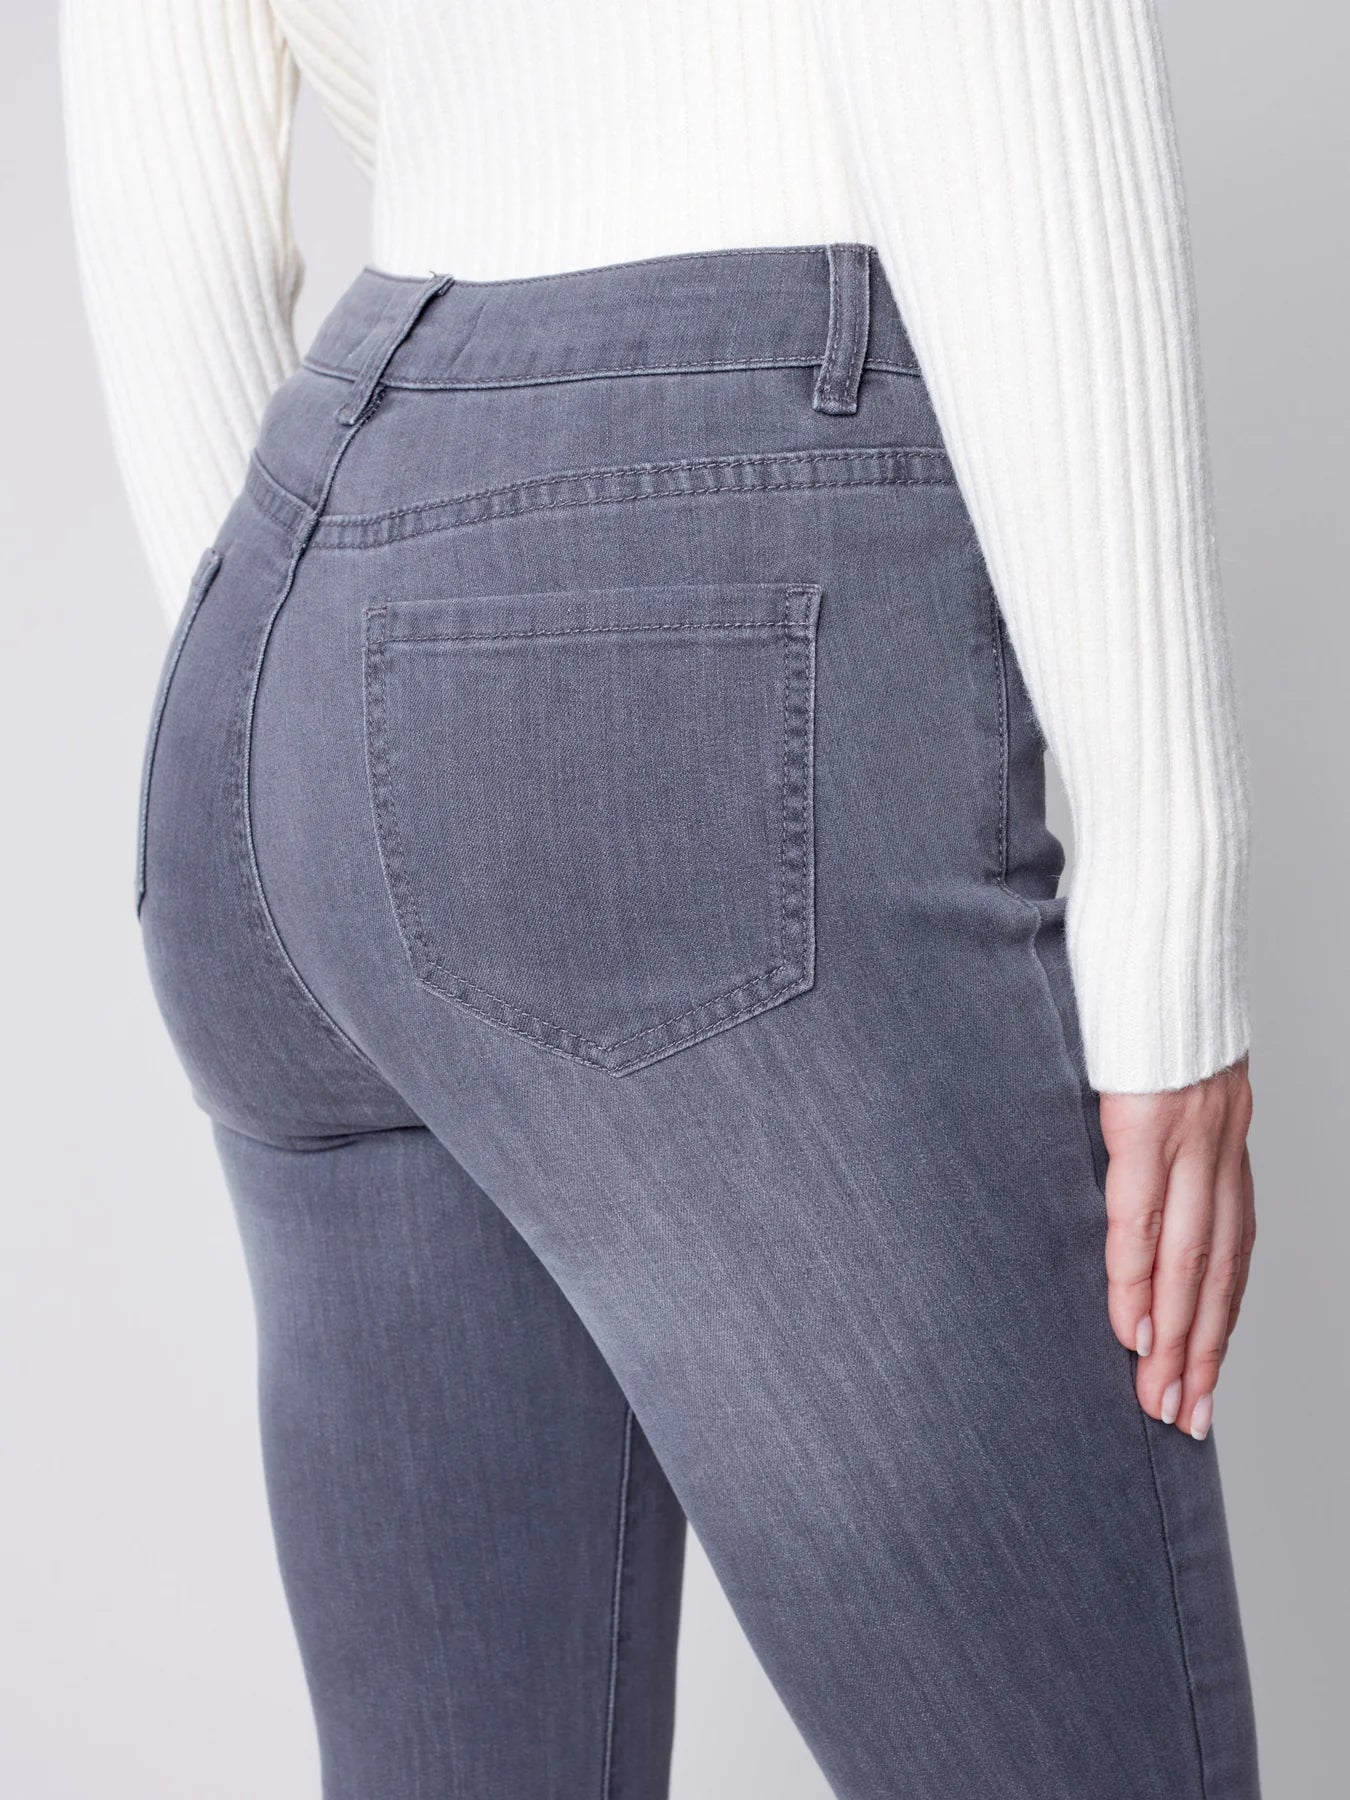 Charlie B Bootcut Jeans with Asymmetrical Fringed Hem - Medium Gray